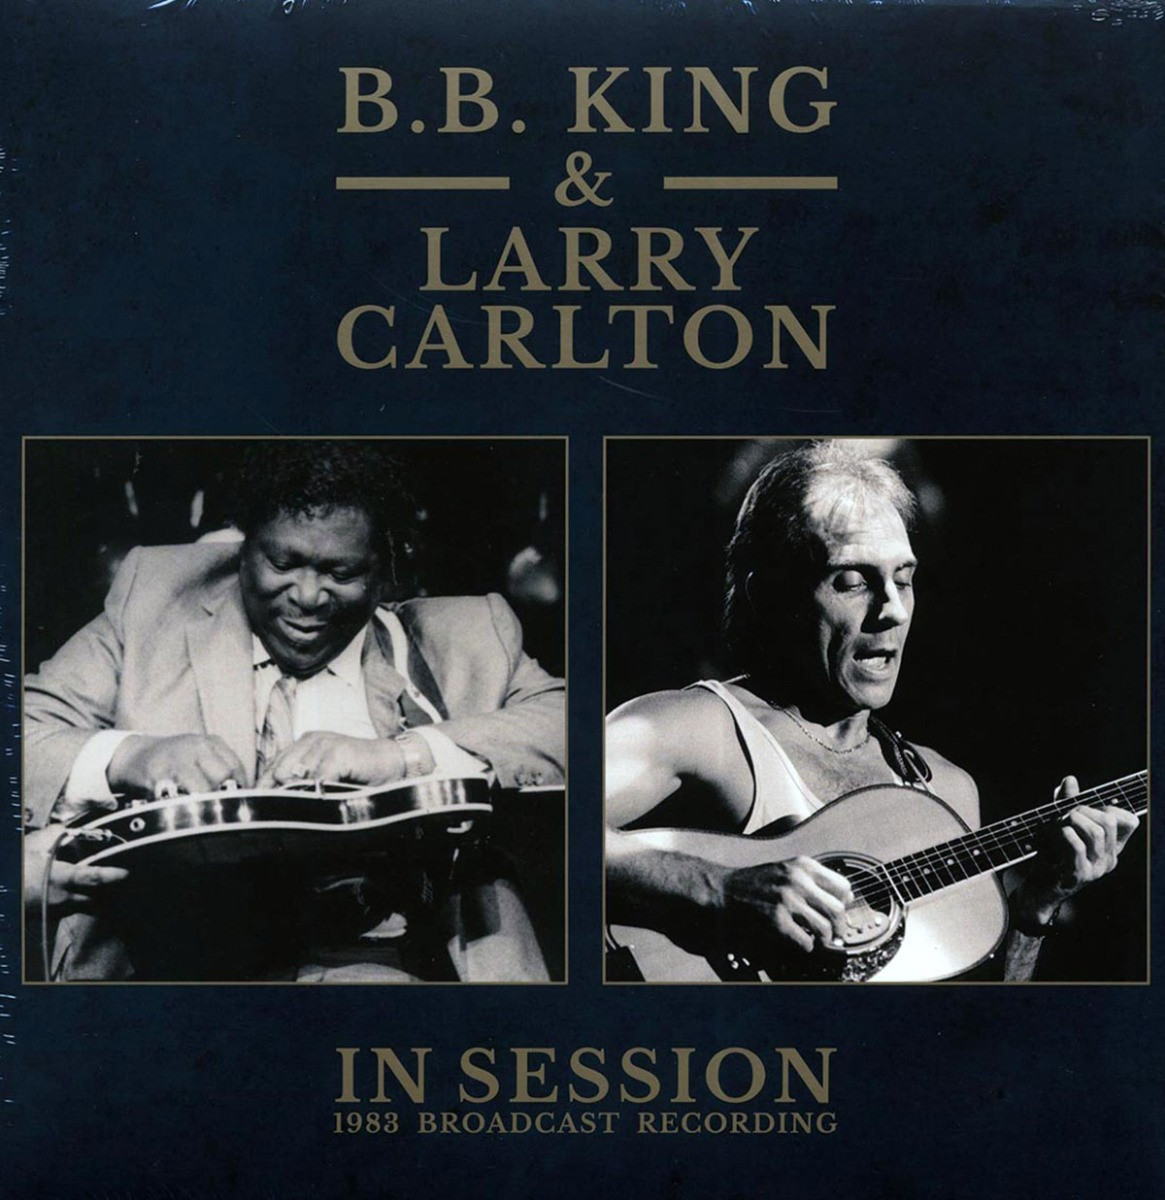 B.B. King, Larry Carlton - In Session: 1983 Broadcast Recording LP